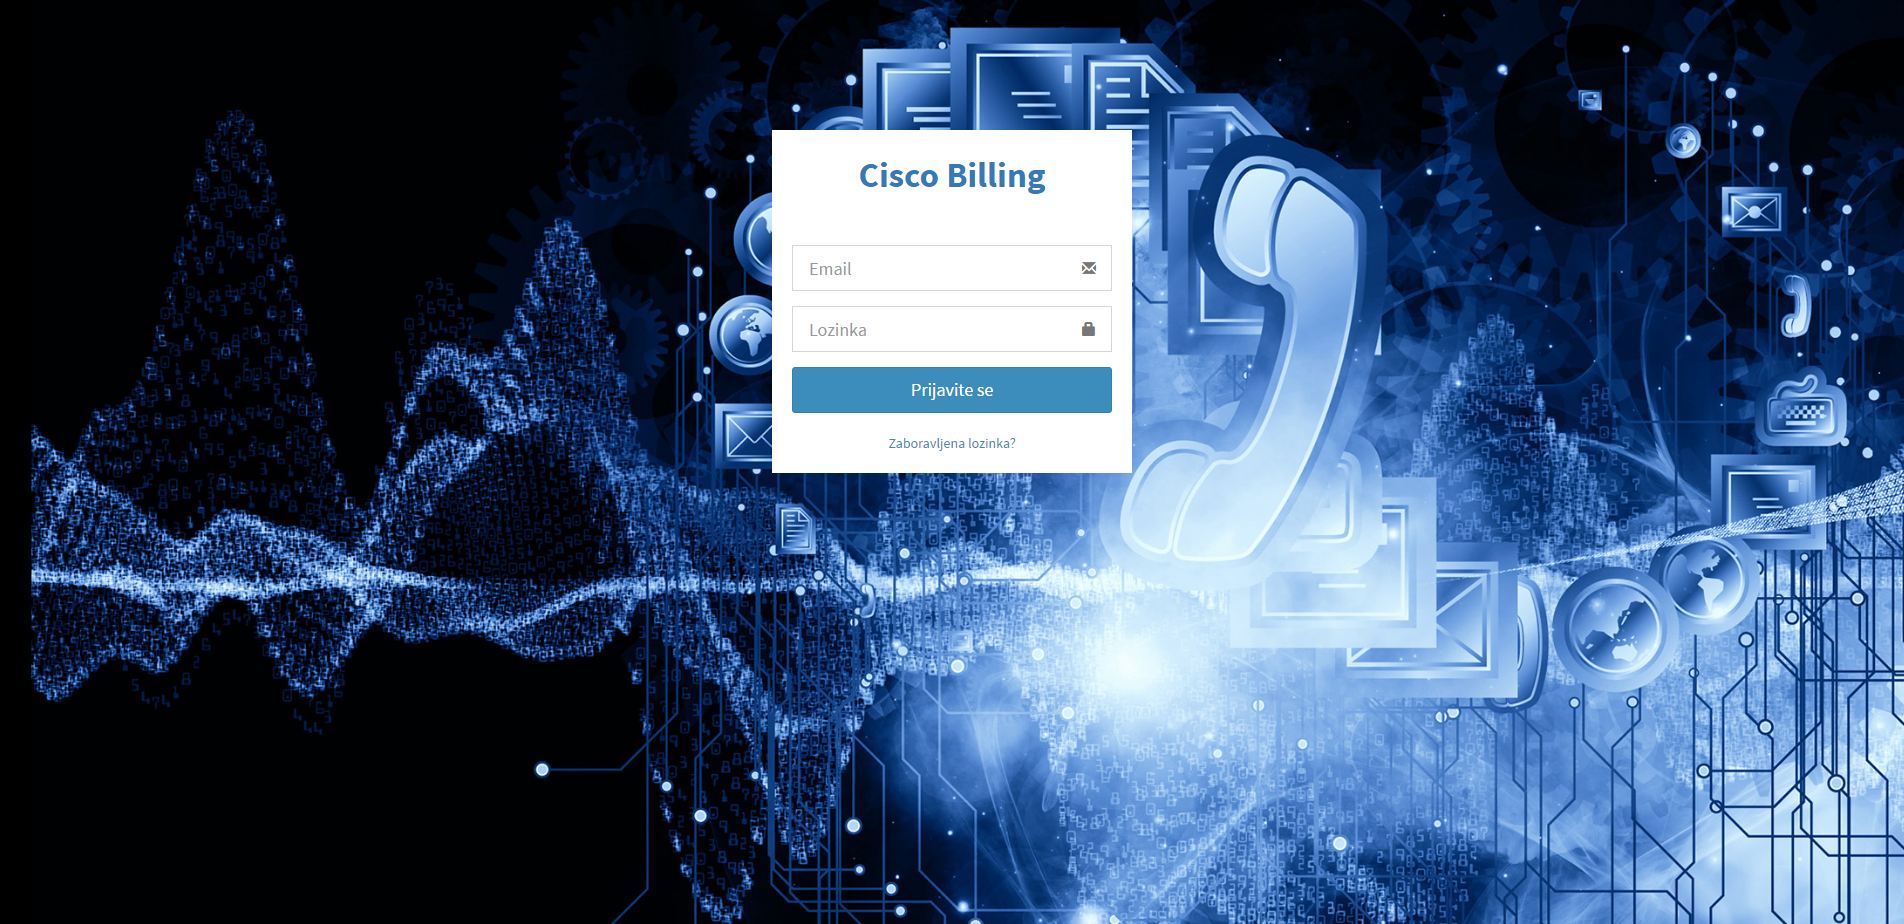 Cisco Billing application